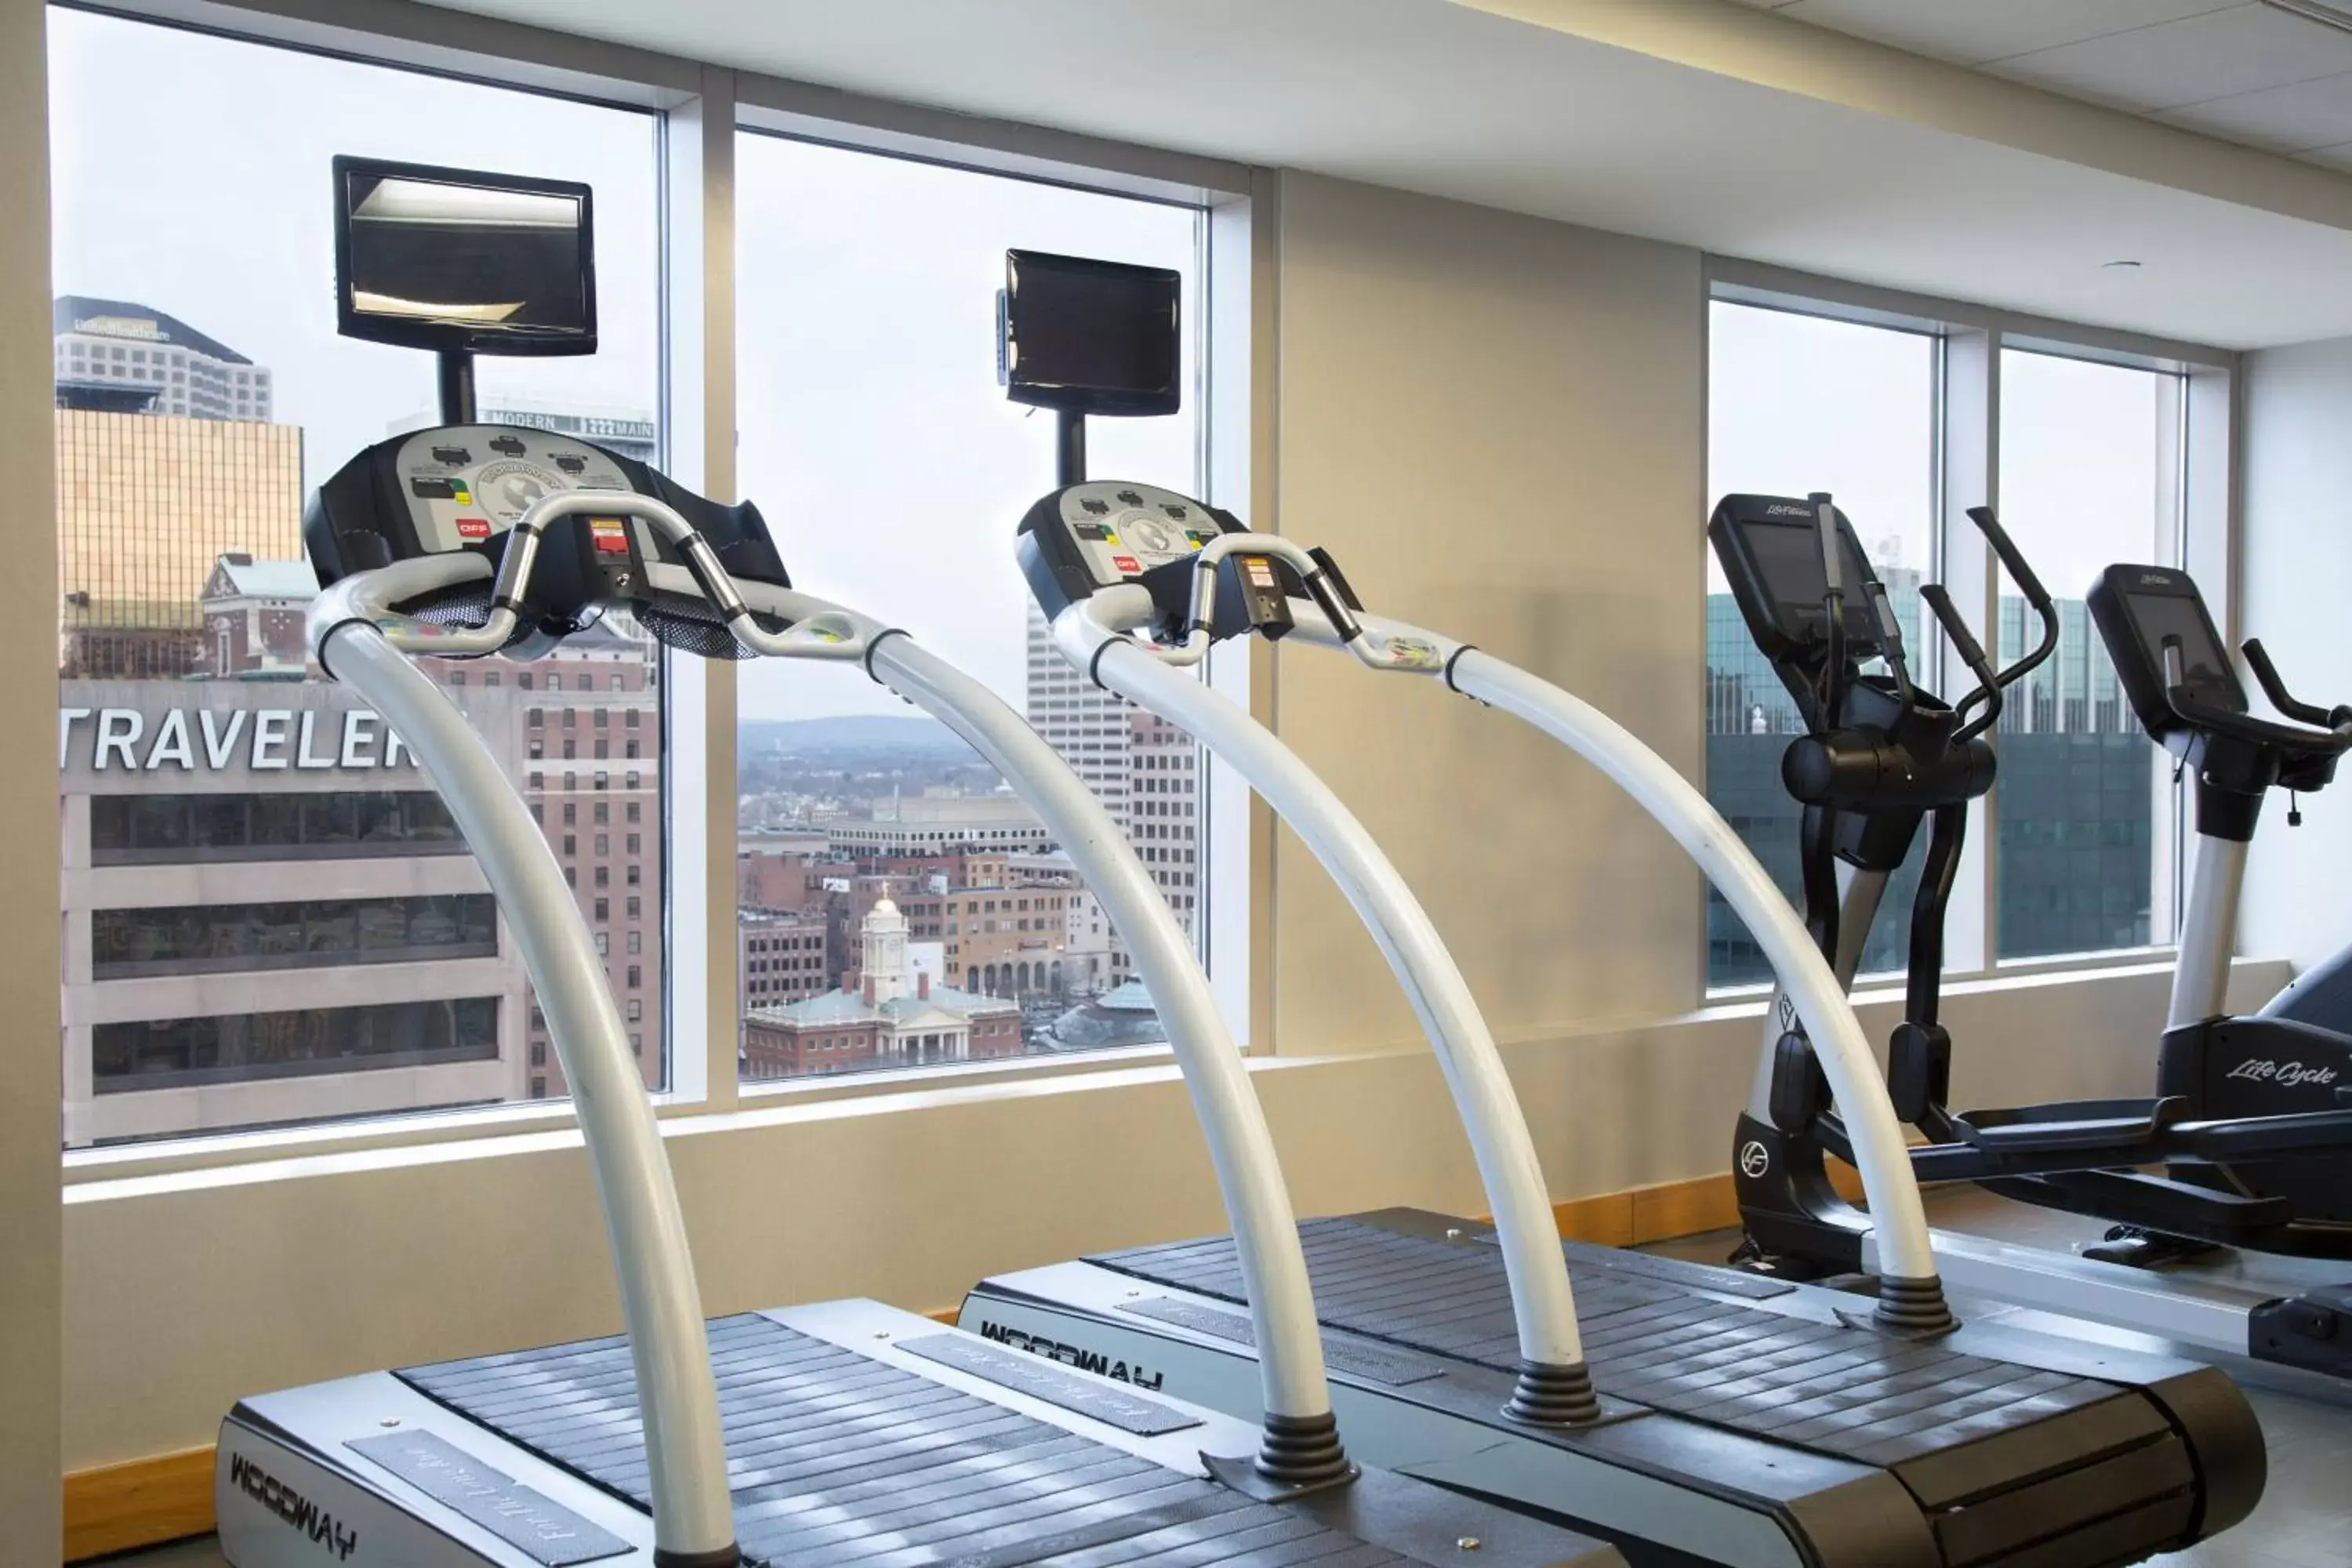 Fitness centre/facilities, Fitness Center/Facilities in Hartford Marriott Downtown